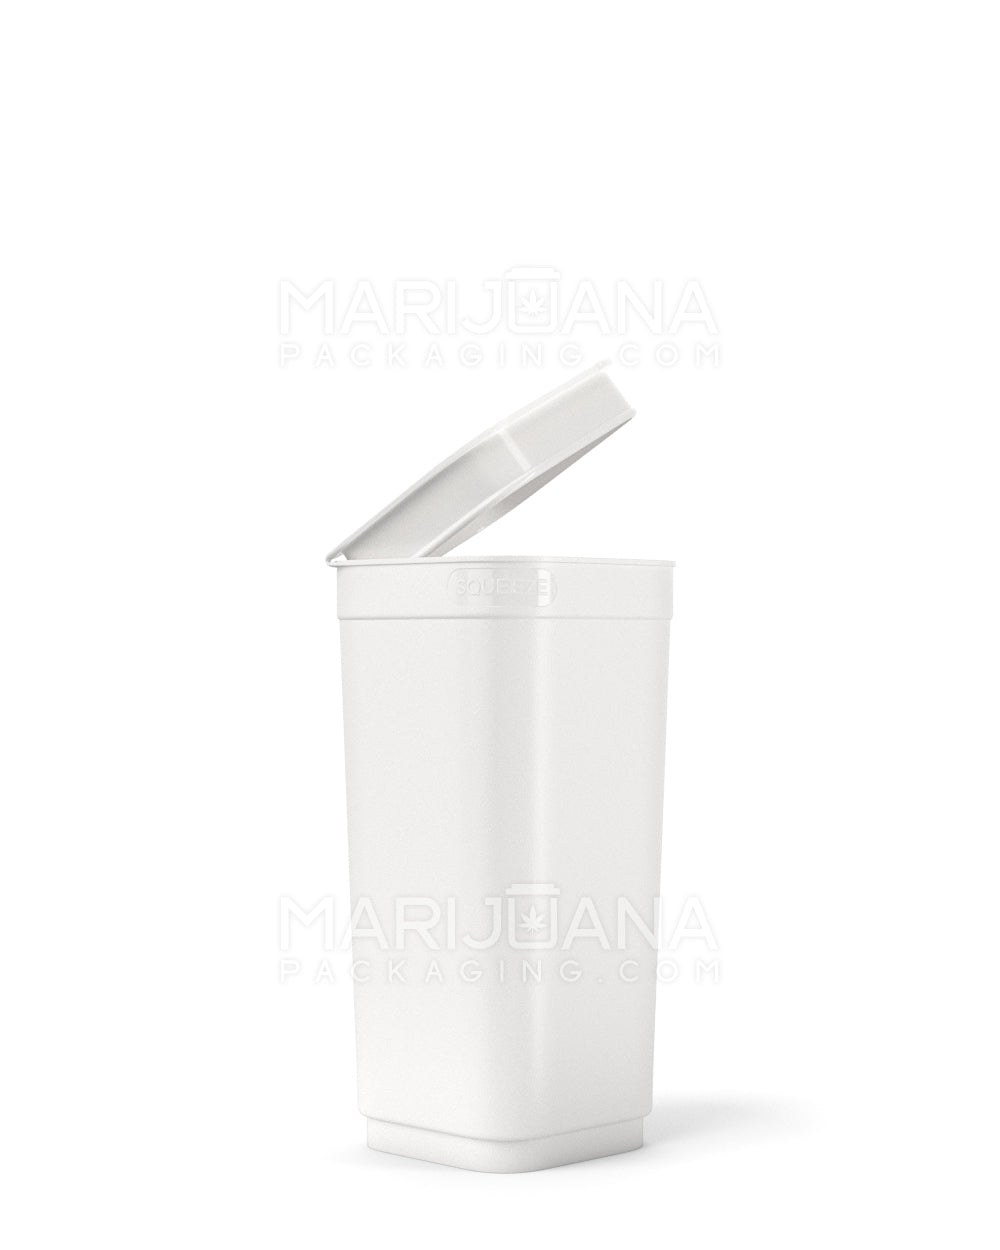 POLLEN GEAR | 100% Recyclable Opaque White Pop Box Pop Top Bottles | 30dr - 7g - 373 Count - 1